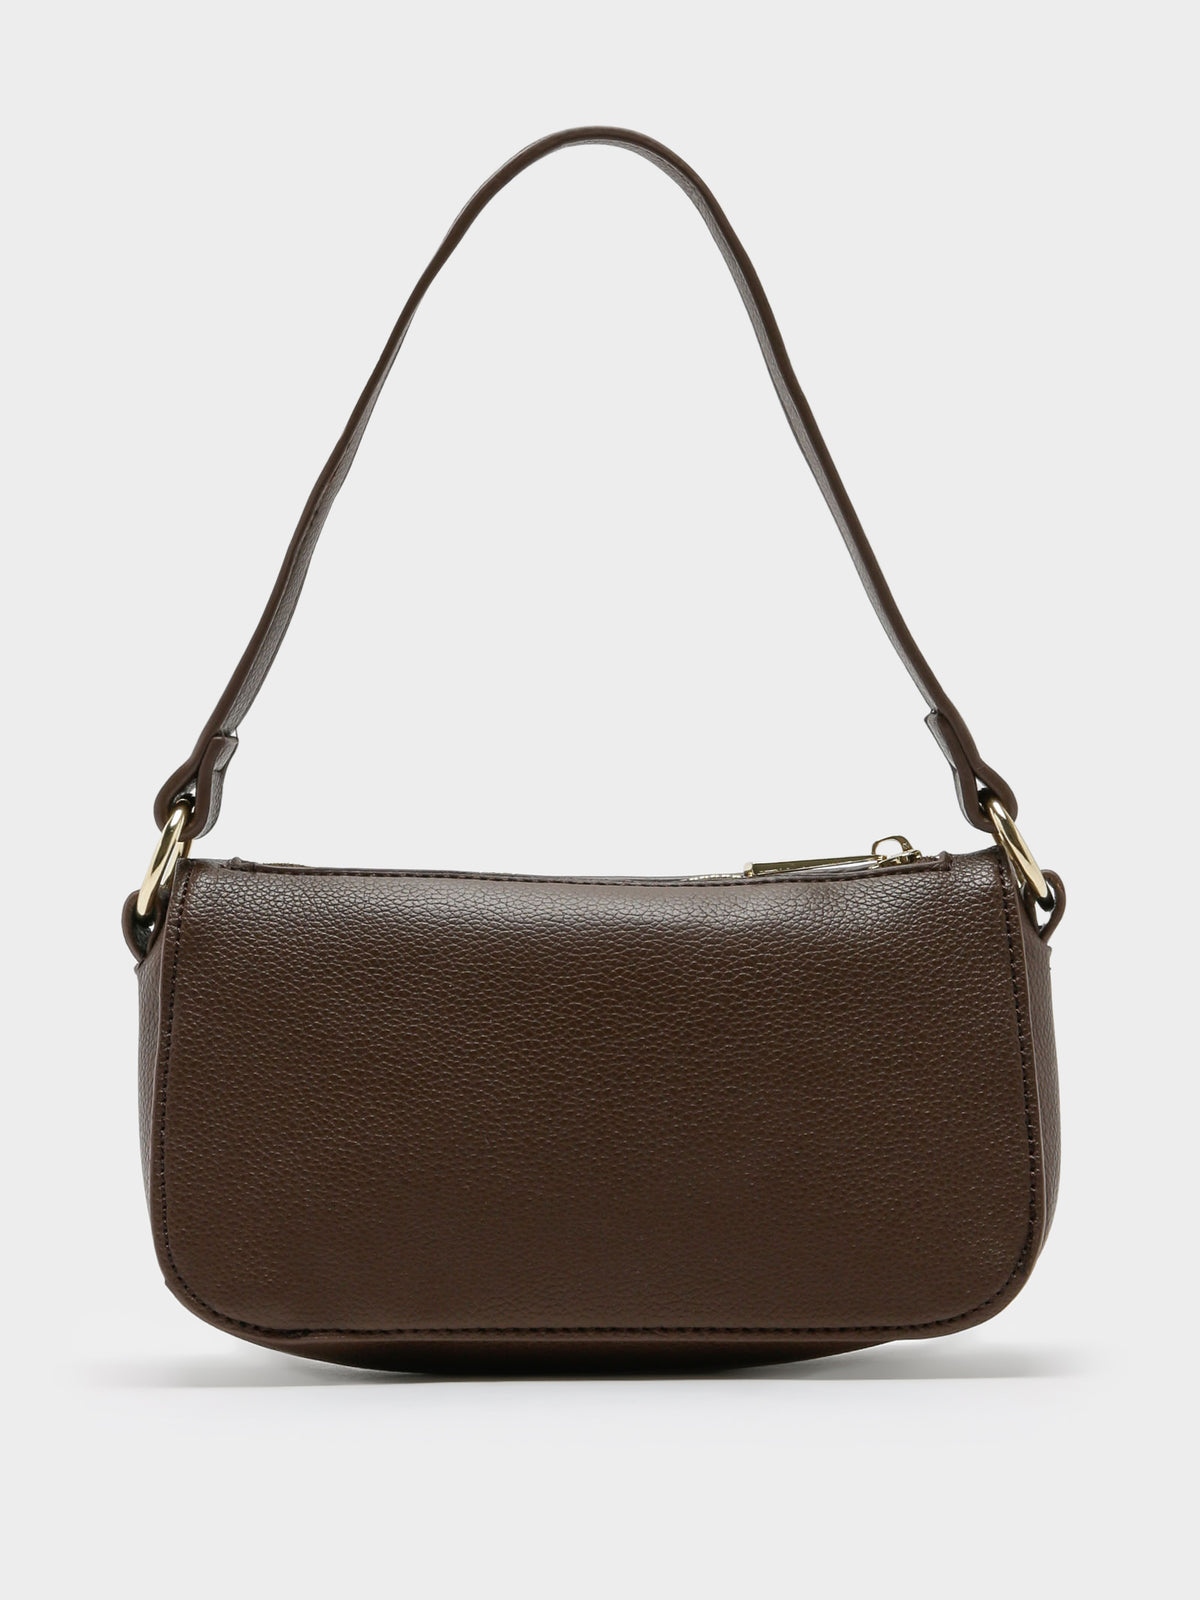 Valencia Shoulder Bag in Chocolate Brown